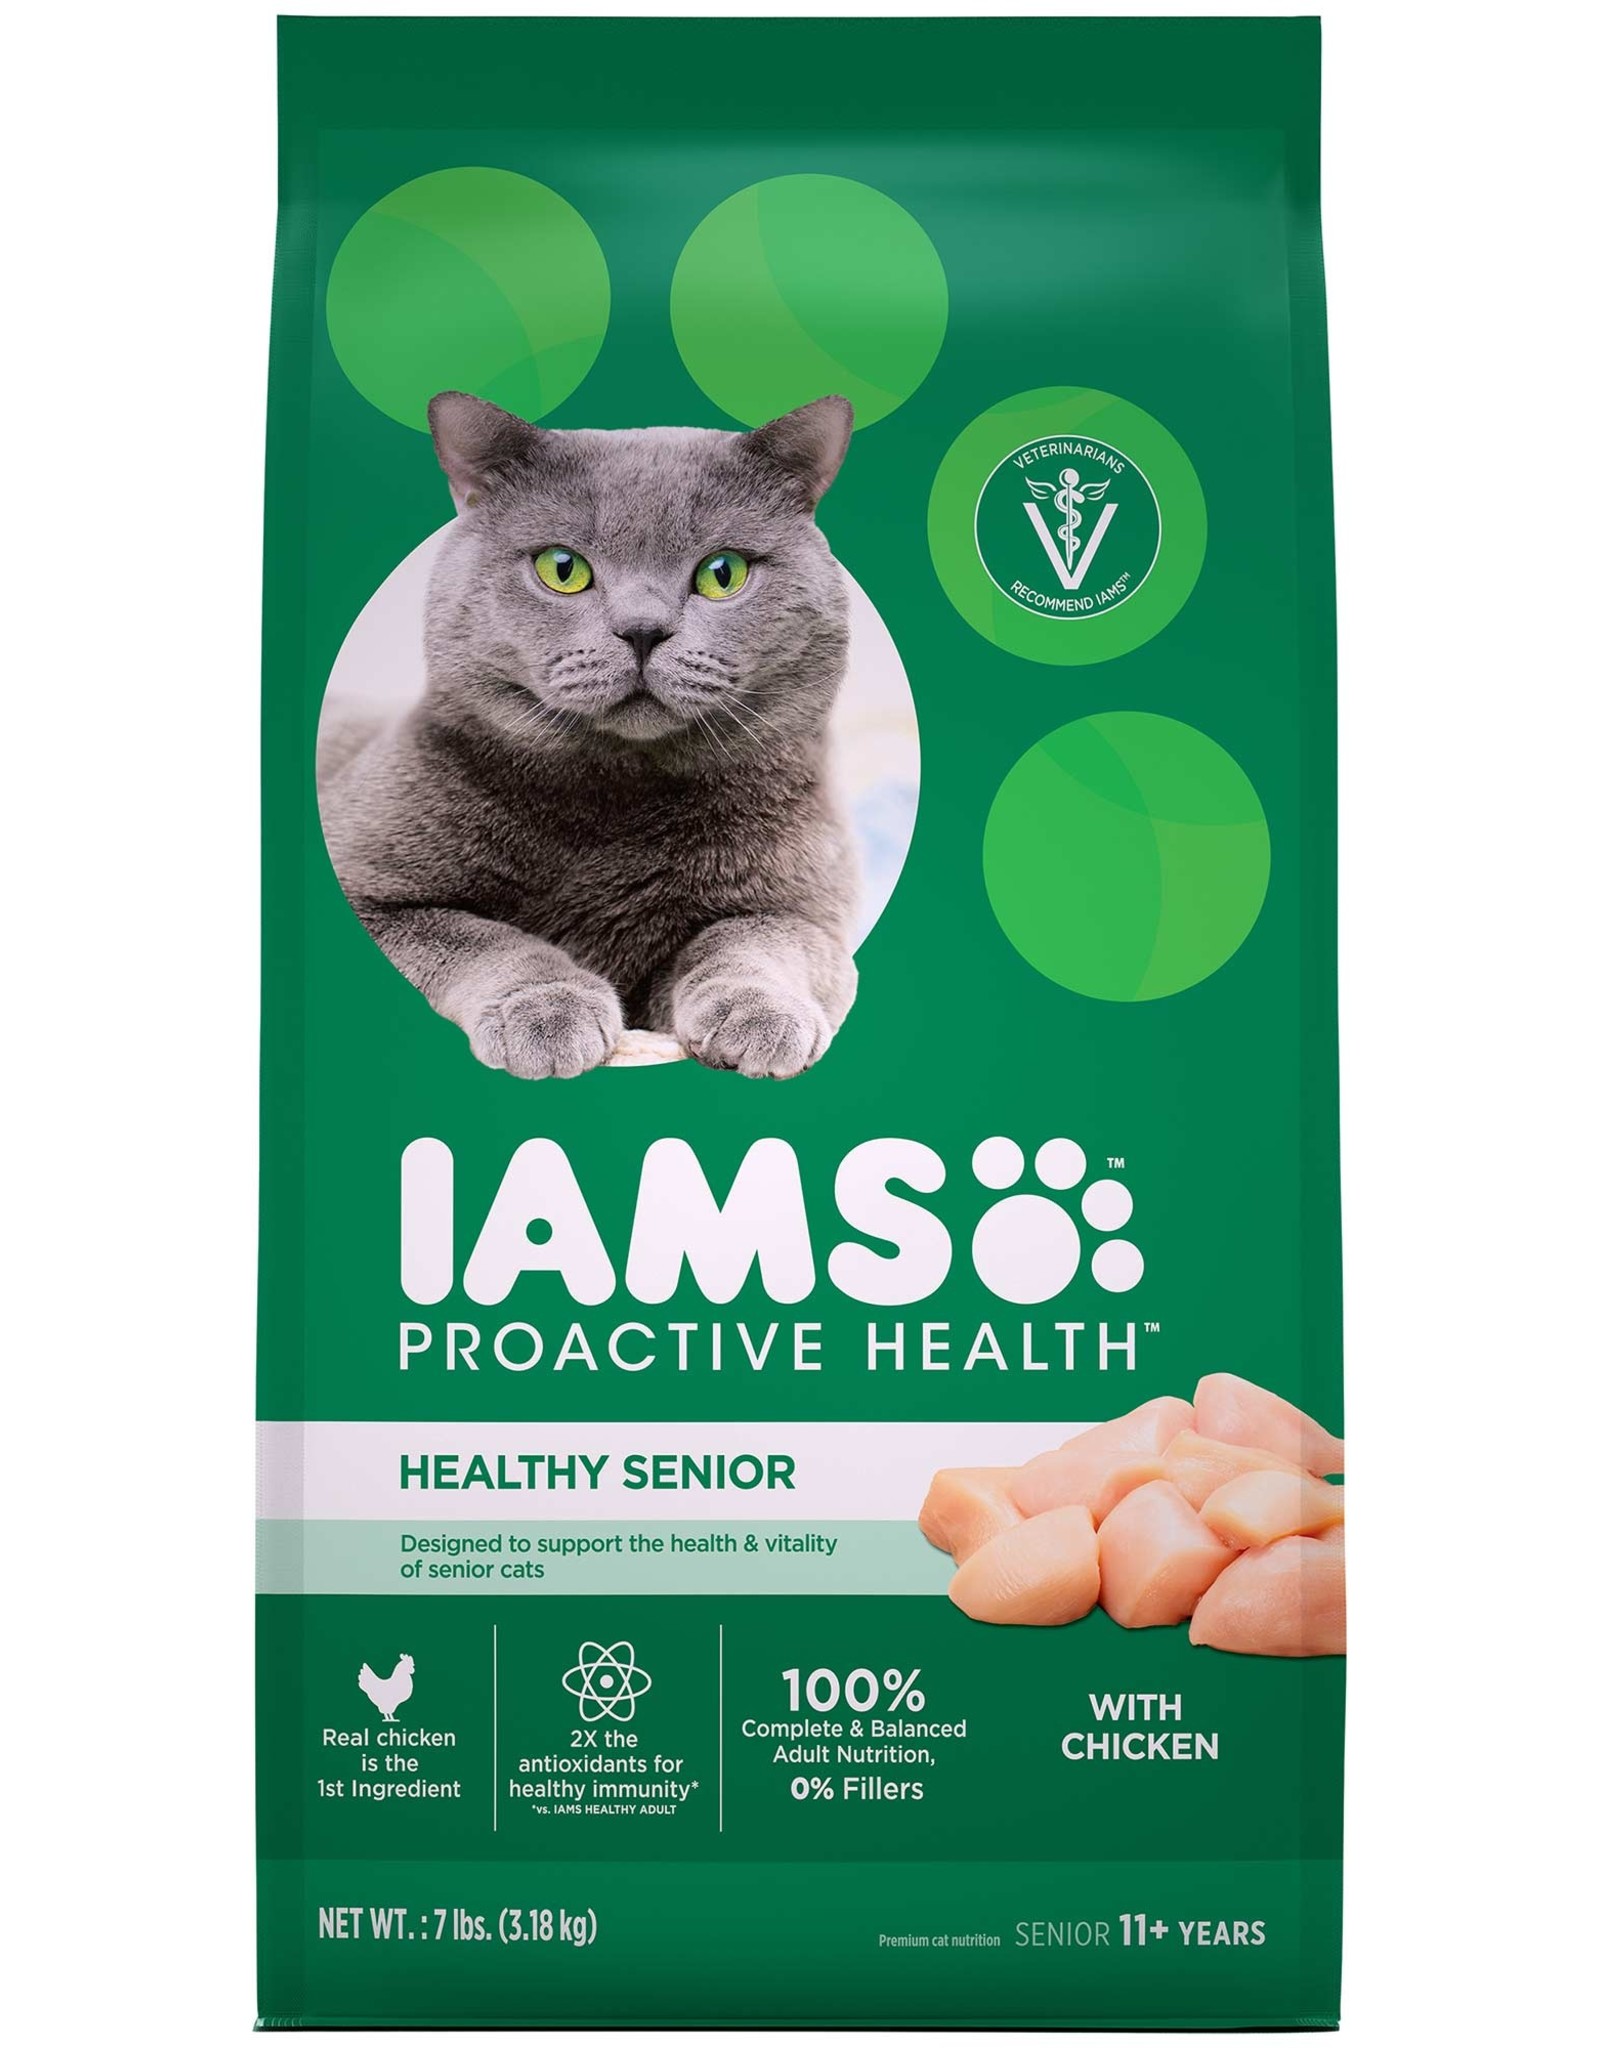 IAMS COMPANY IAMS CAT HEALTHY SENIOR 16LBS